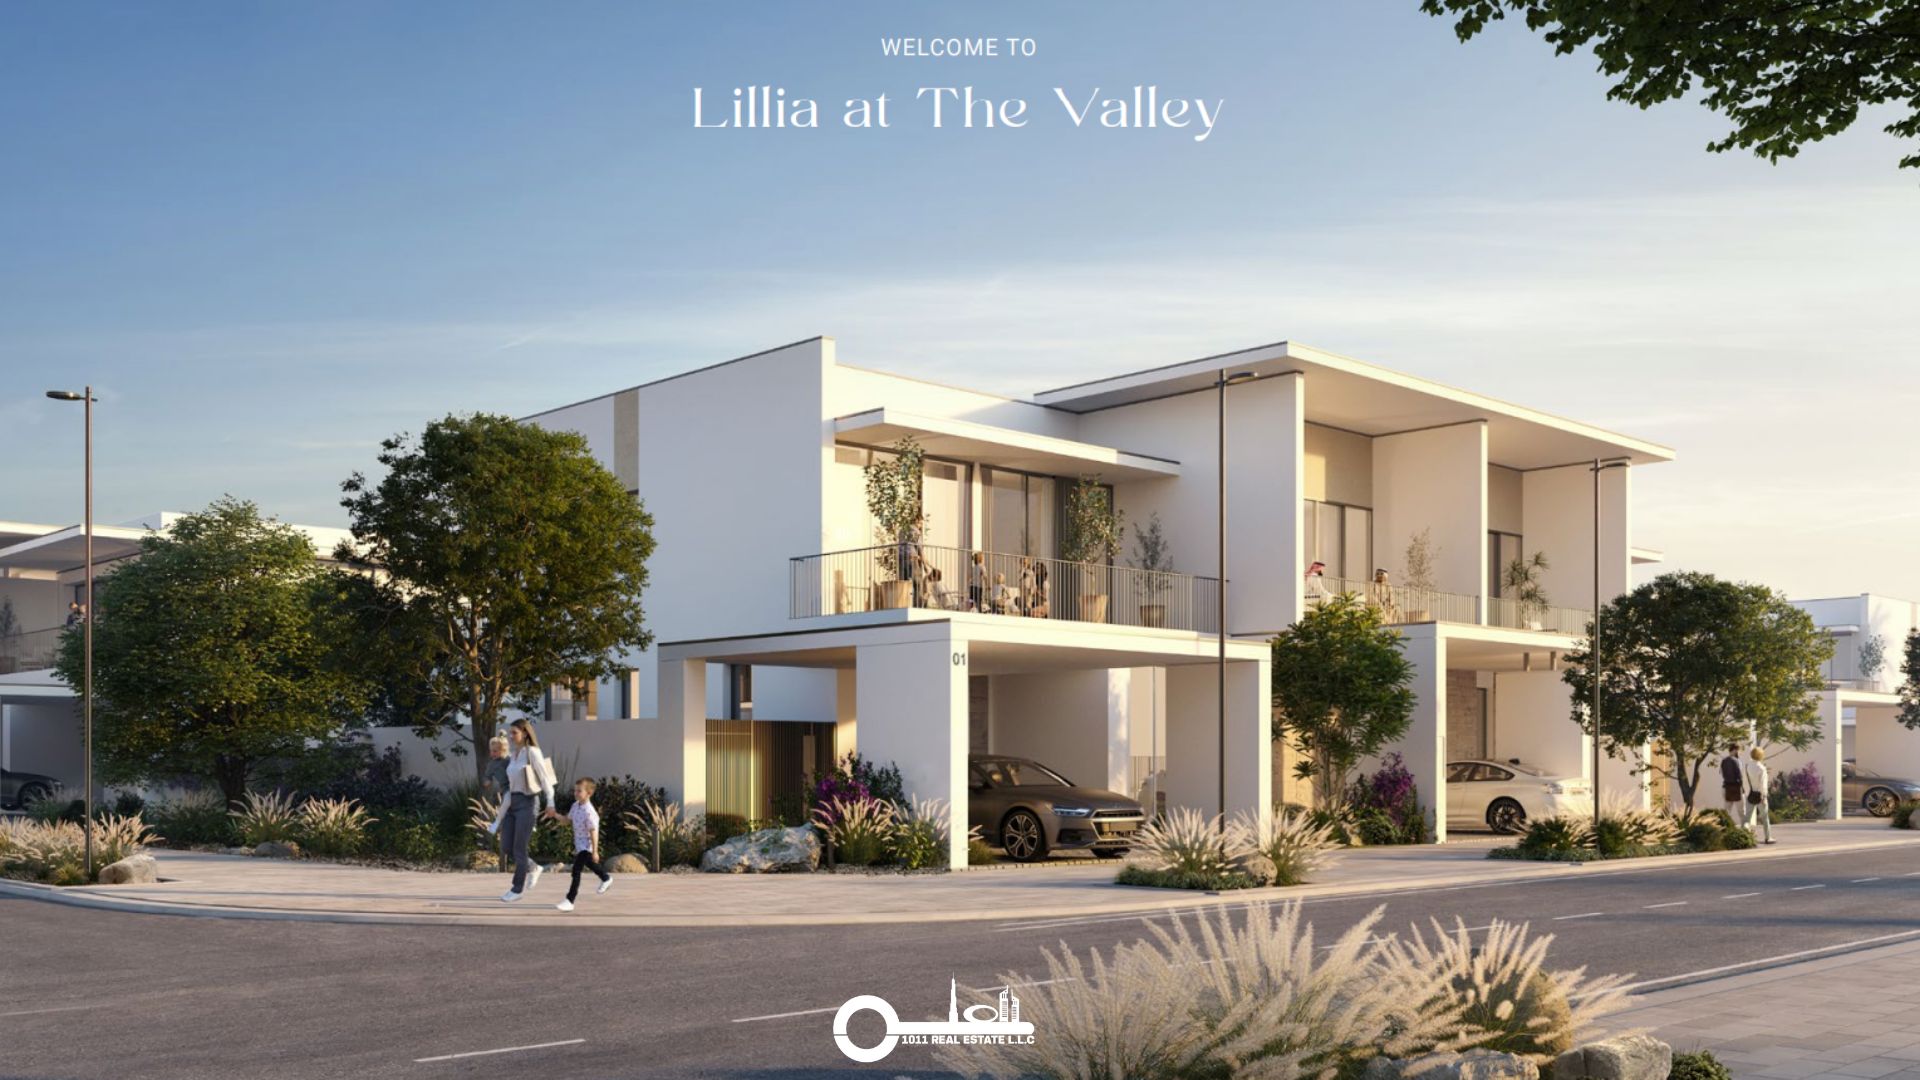 Lillia 1011 Real Estate Dubai